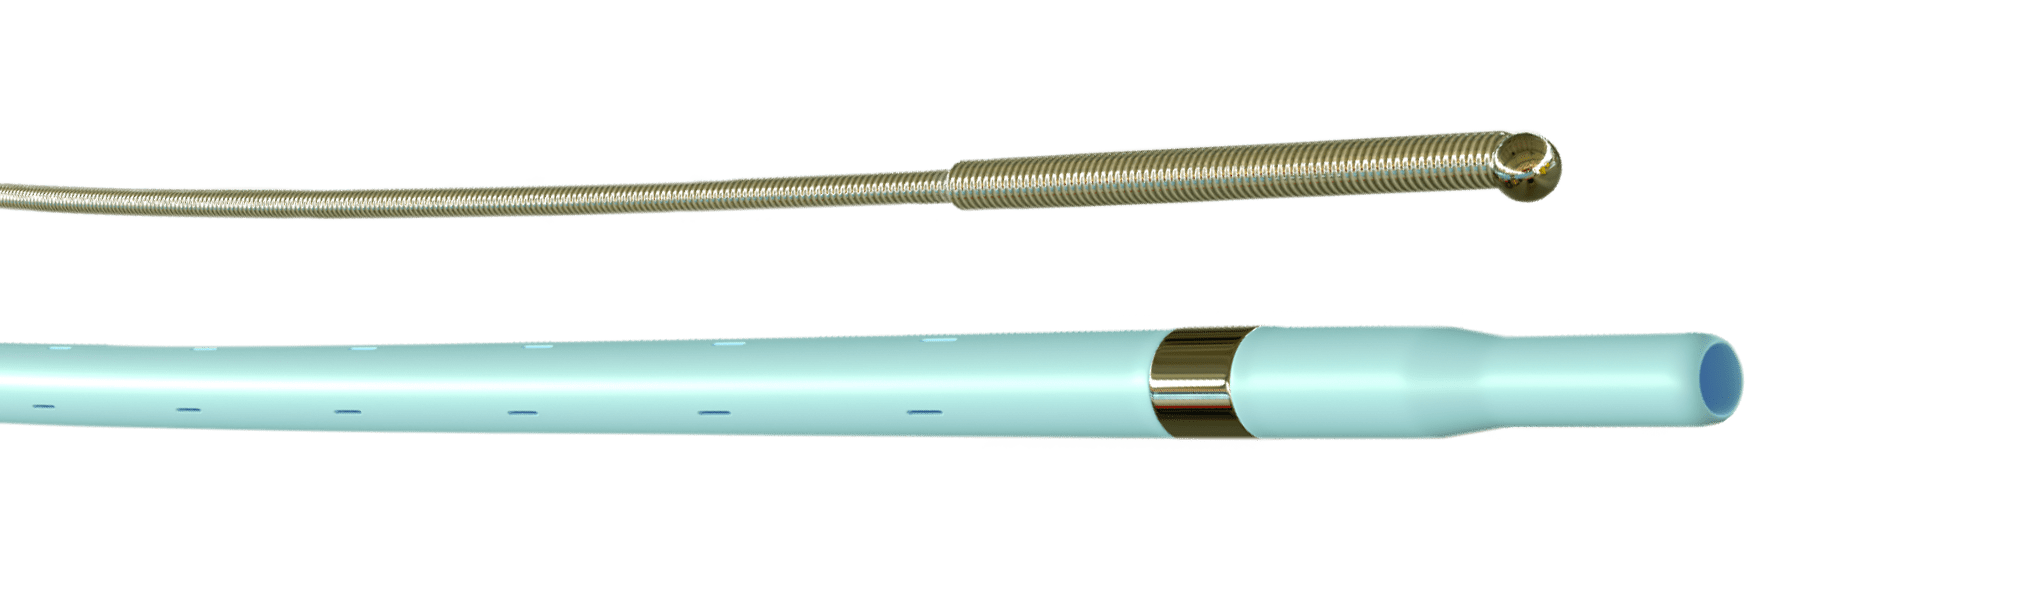 Horizonal Uni-Fuse catheters